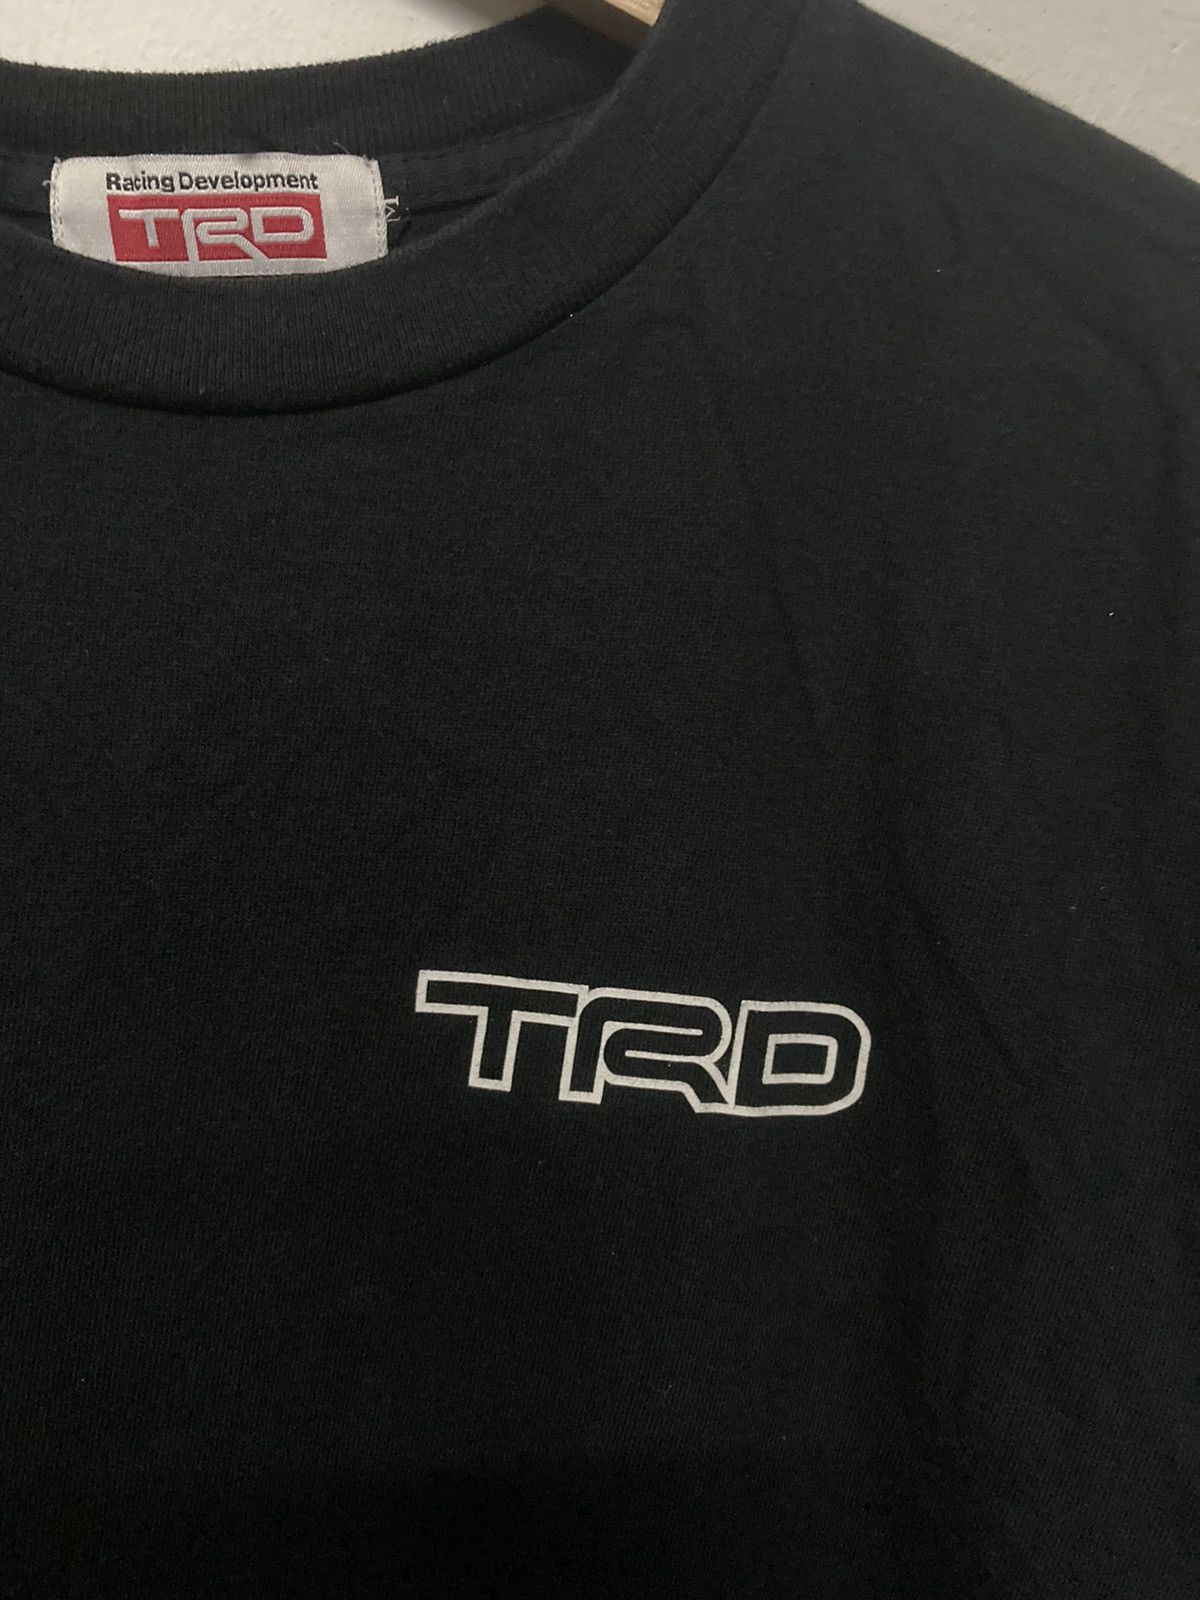 Vintage TRD Racing Development T-shirt - 4